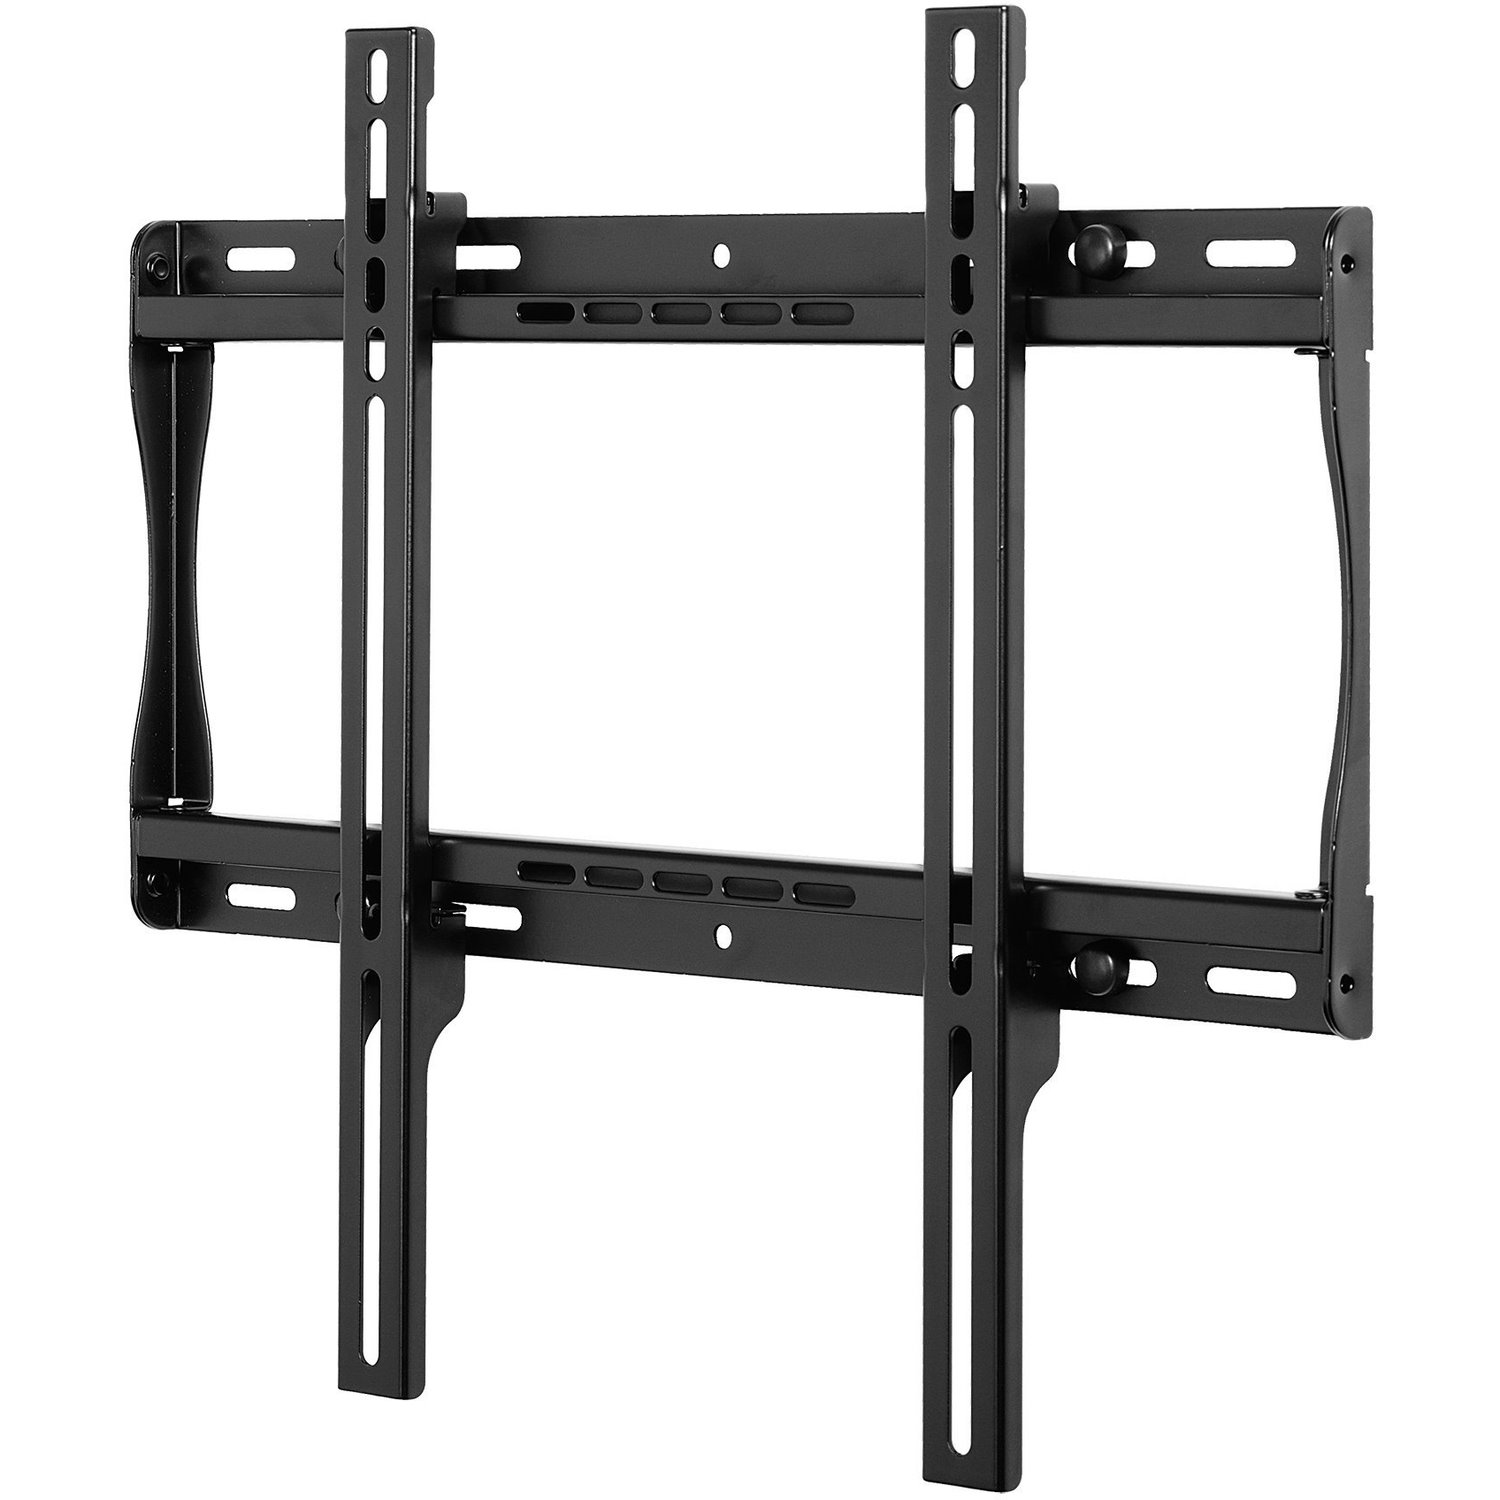 Peerless-AV smartMount SF640(P) Wall Mount for Flat Panel Display - Black